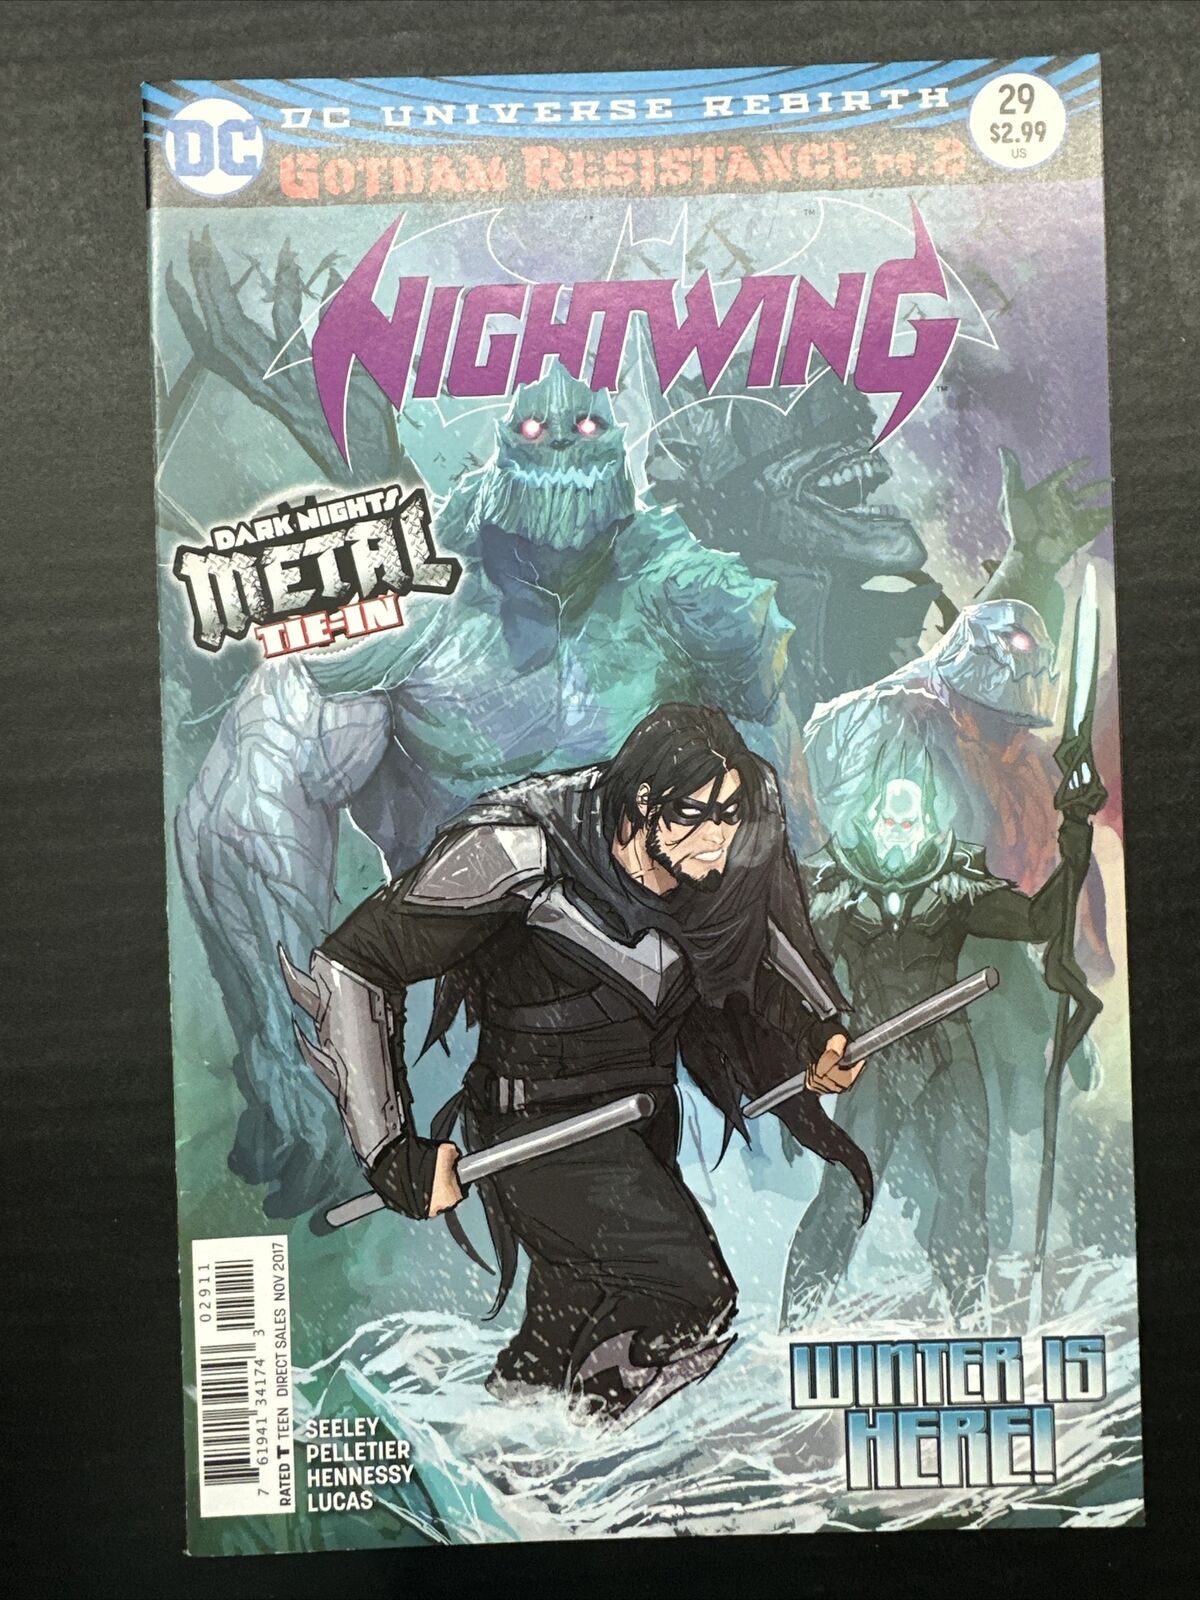 NIGHTWING #29 Batman Who Laughs Cameo Appearance Dark Knights Metal 2017 Metal